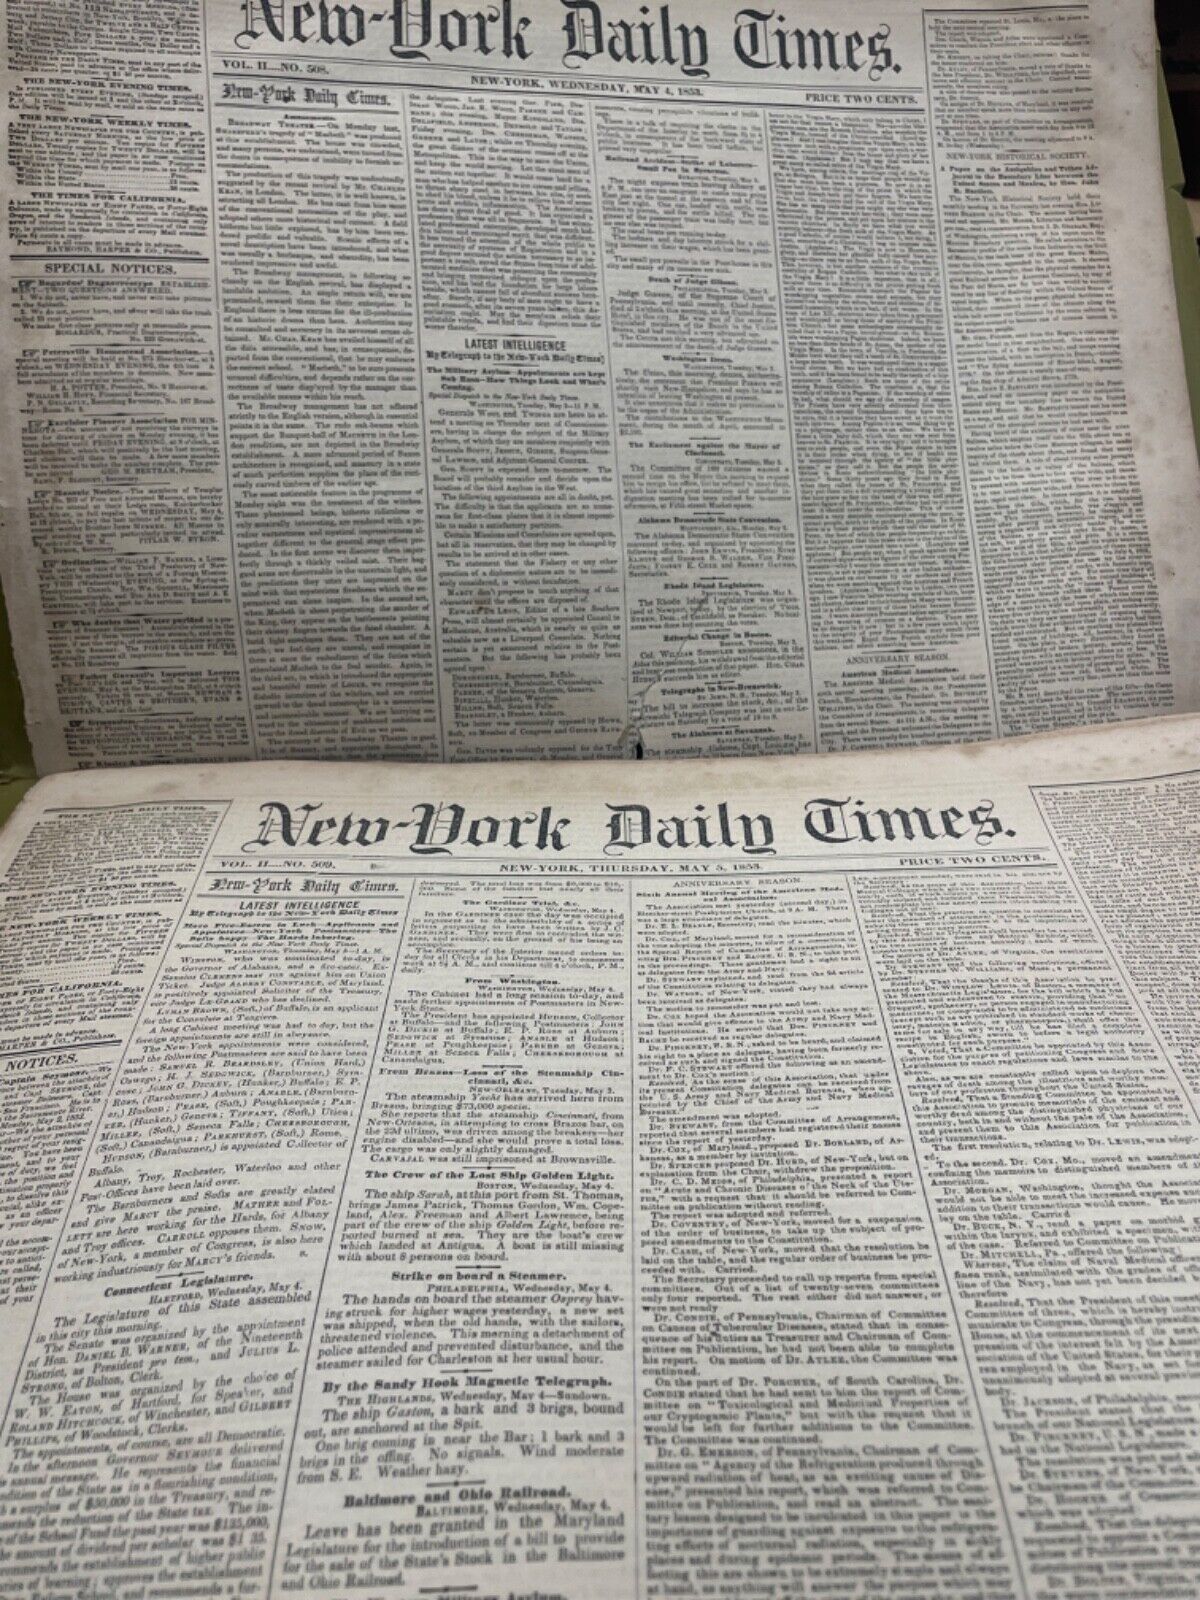 New York Daily Times 7 issues may 4 - 7th, may 8, may 25, 26 1853